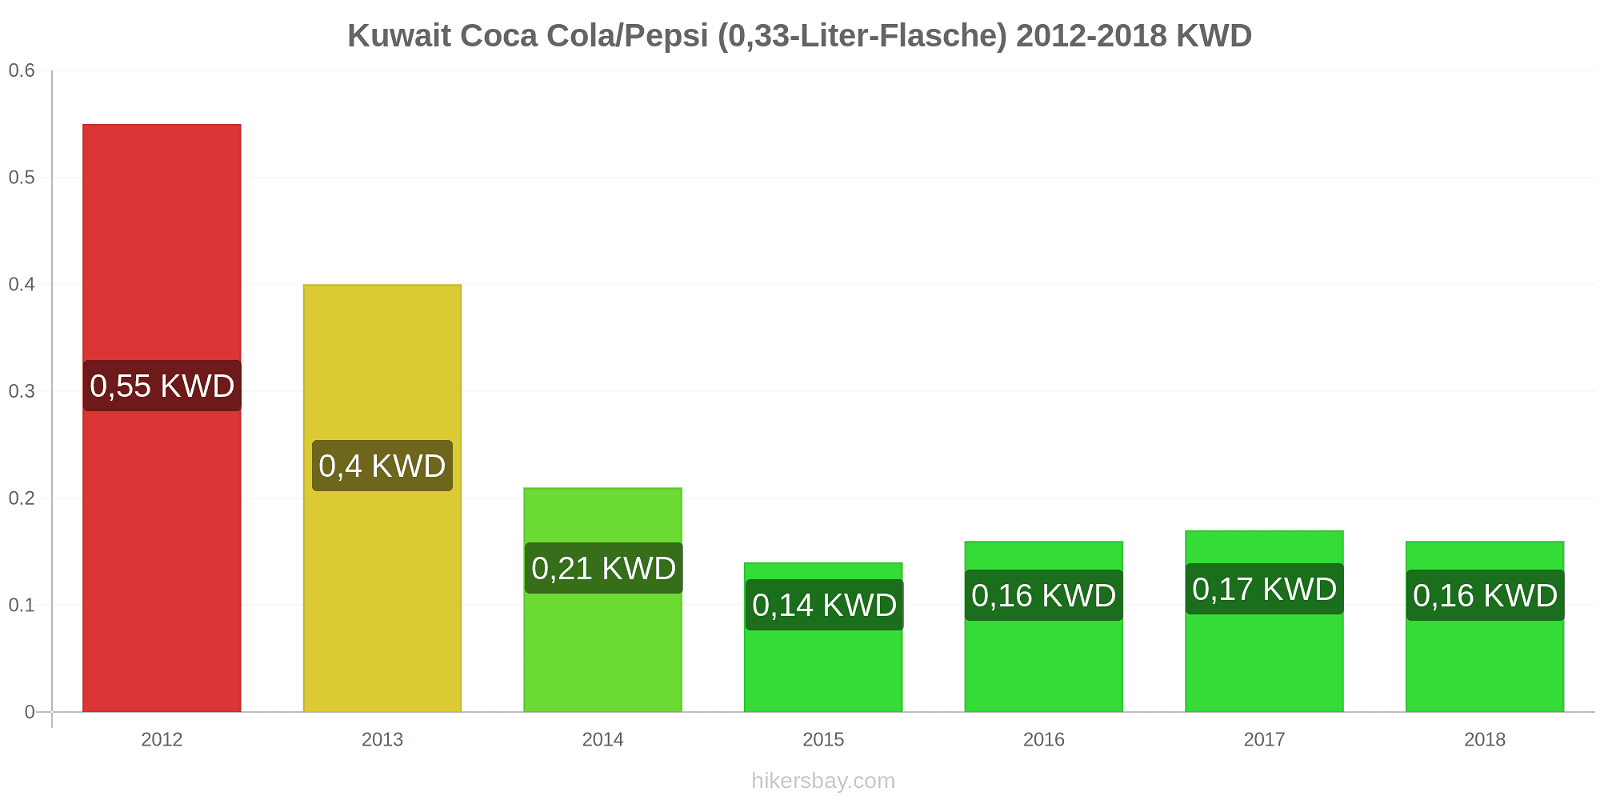 Kuwait Preisänderungen Coke/Pepsi (0.33-Liter-Flasche) hikersbay.com